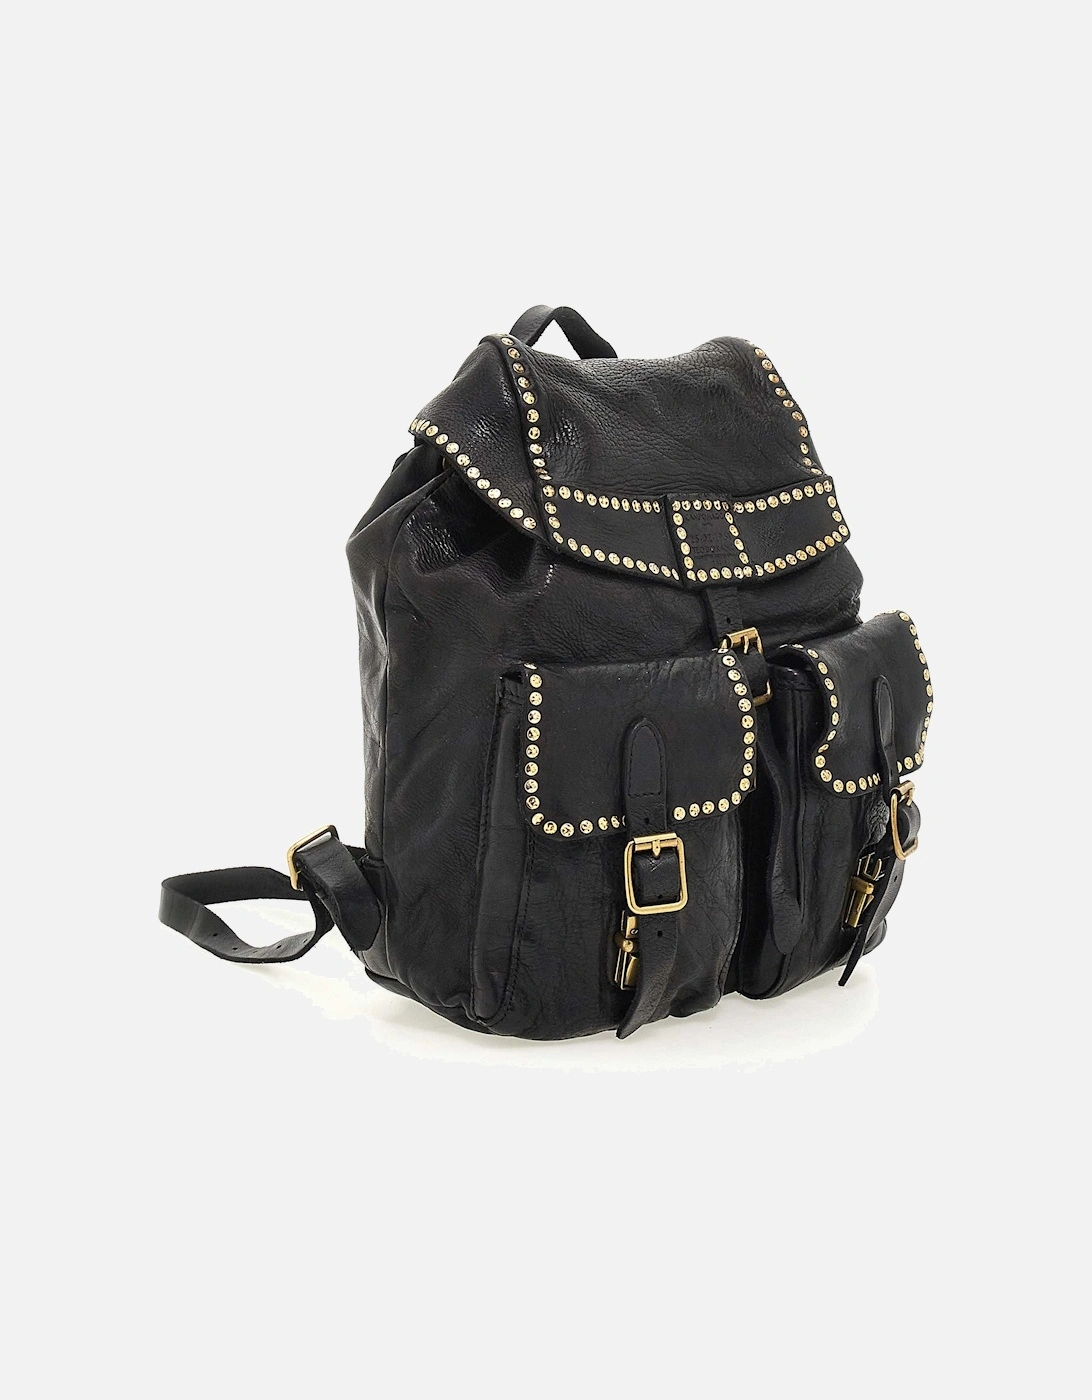 Kura Leather Studded Backpack